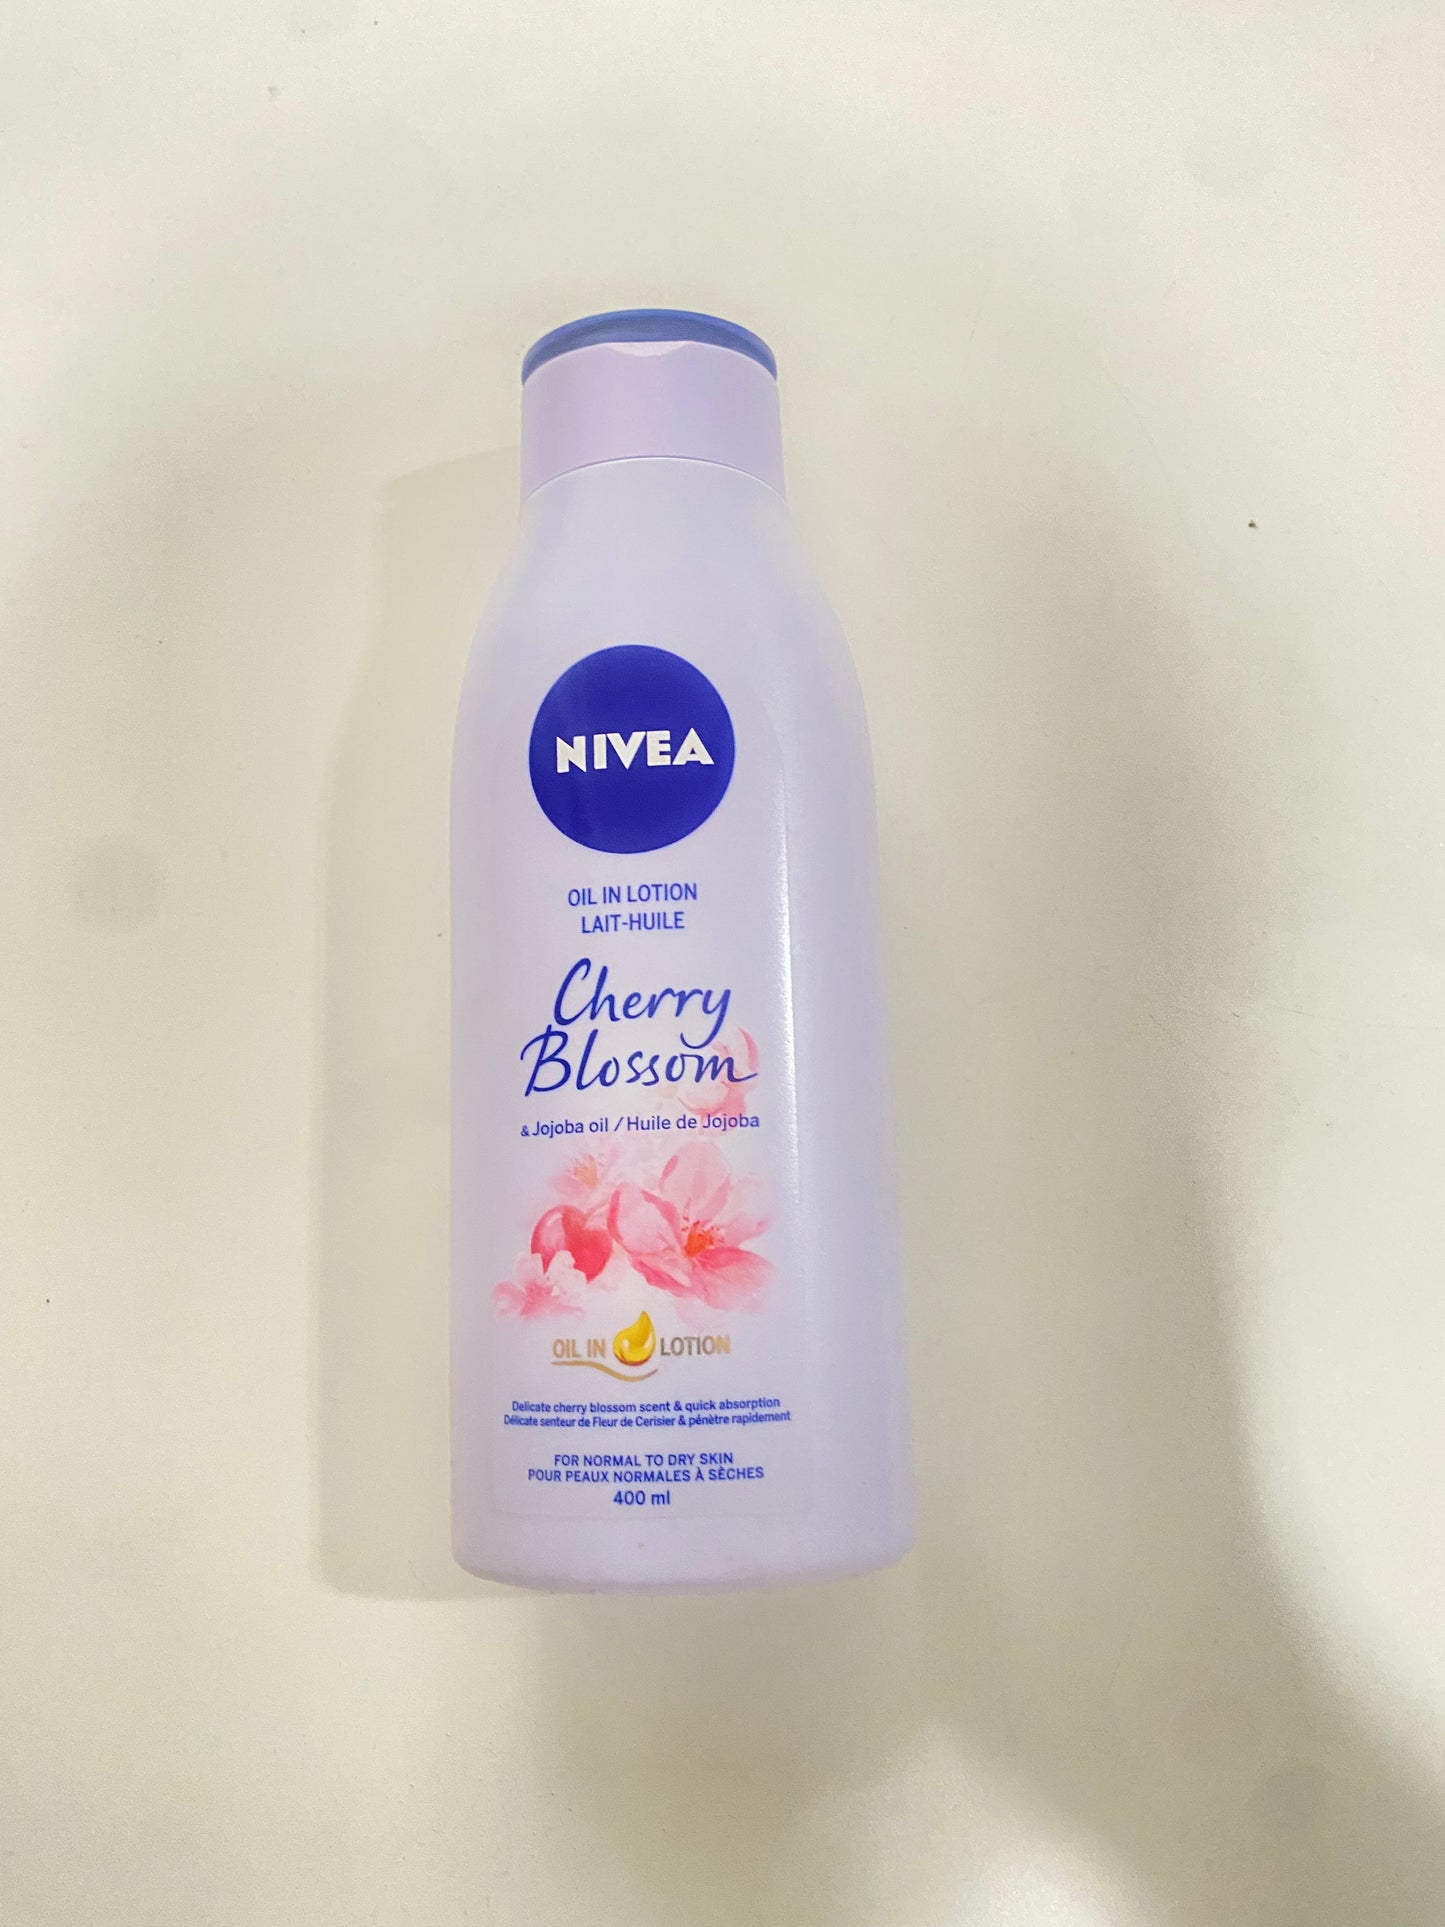 Nivea Oil in Lotion - Cherry Blossom and Jojoba Oil